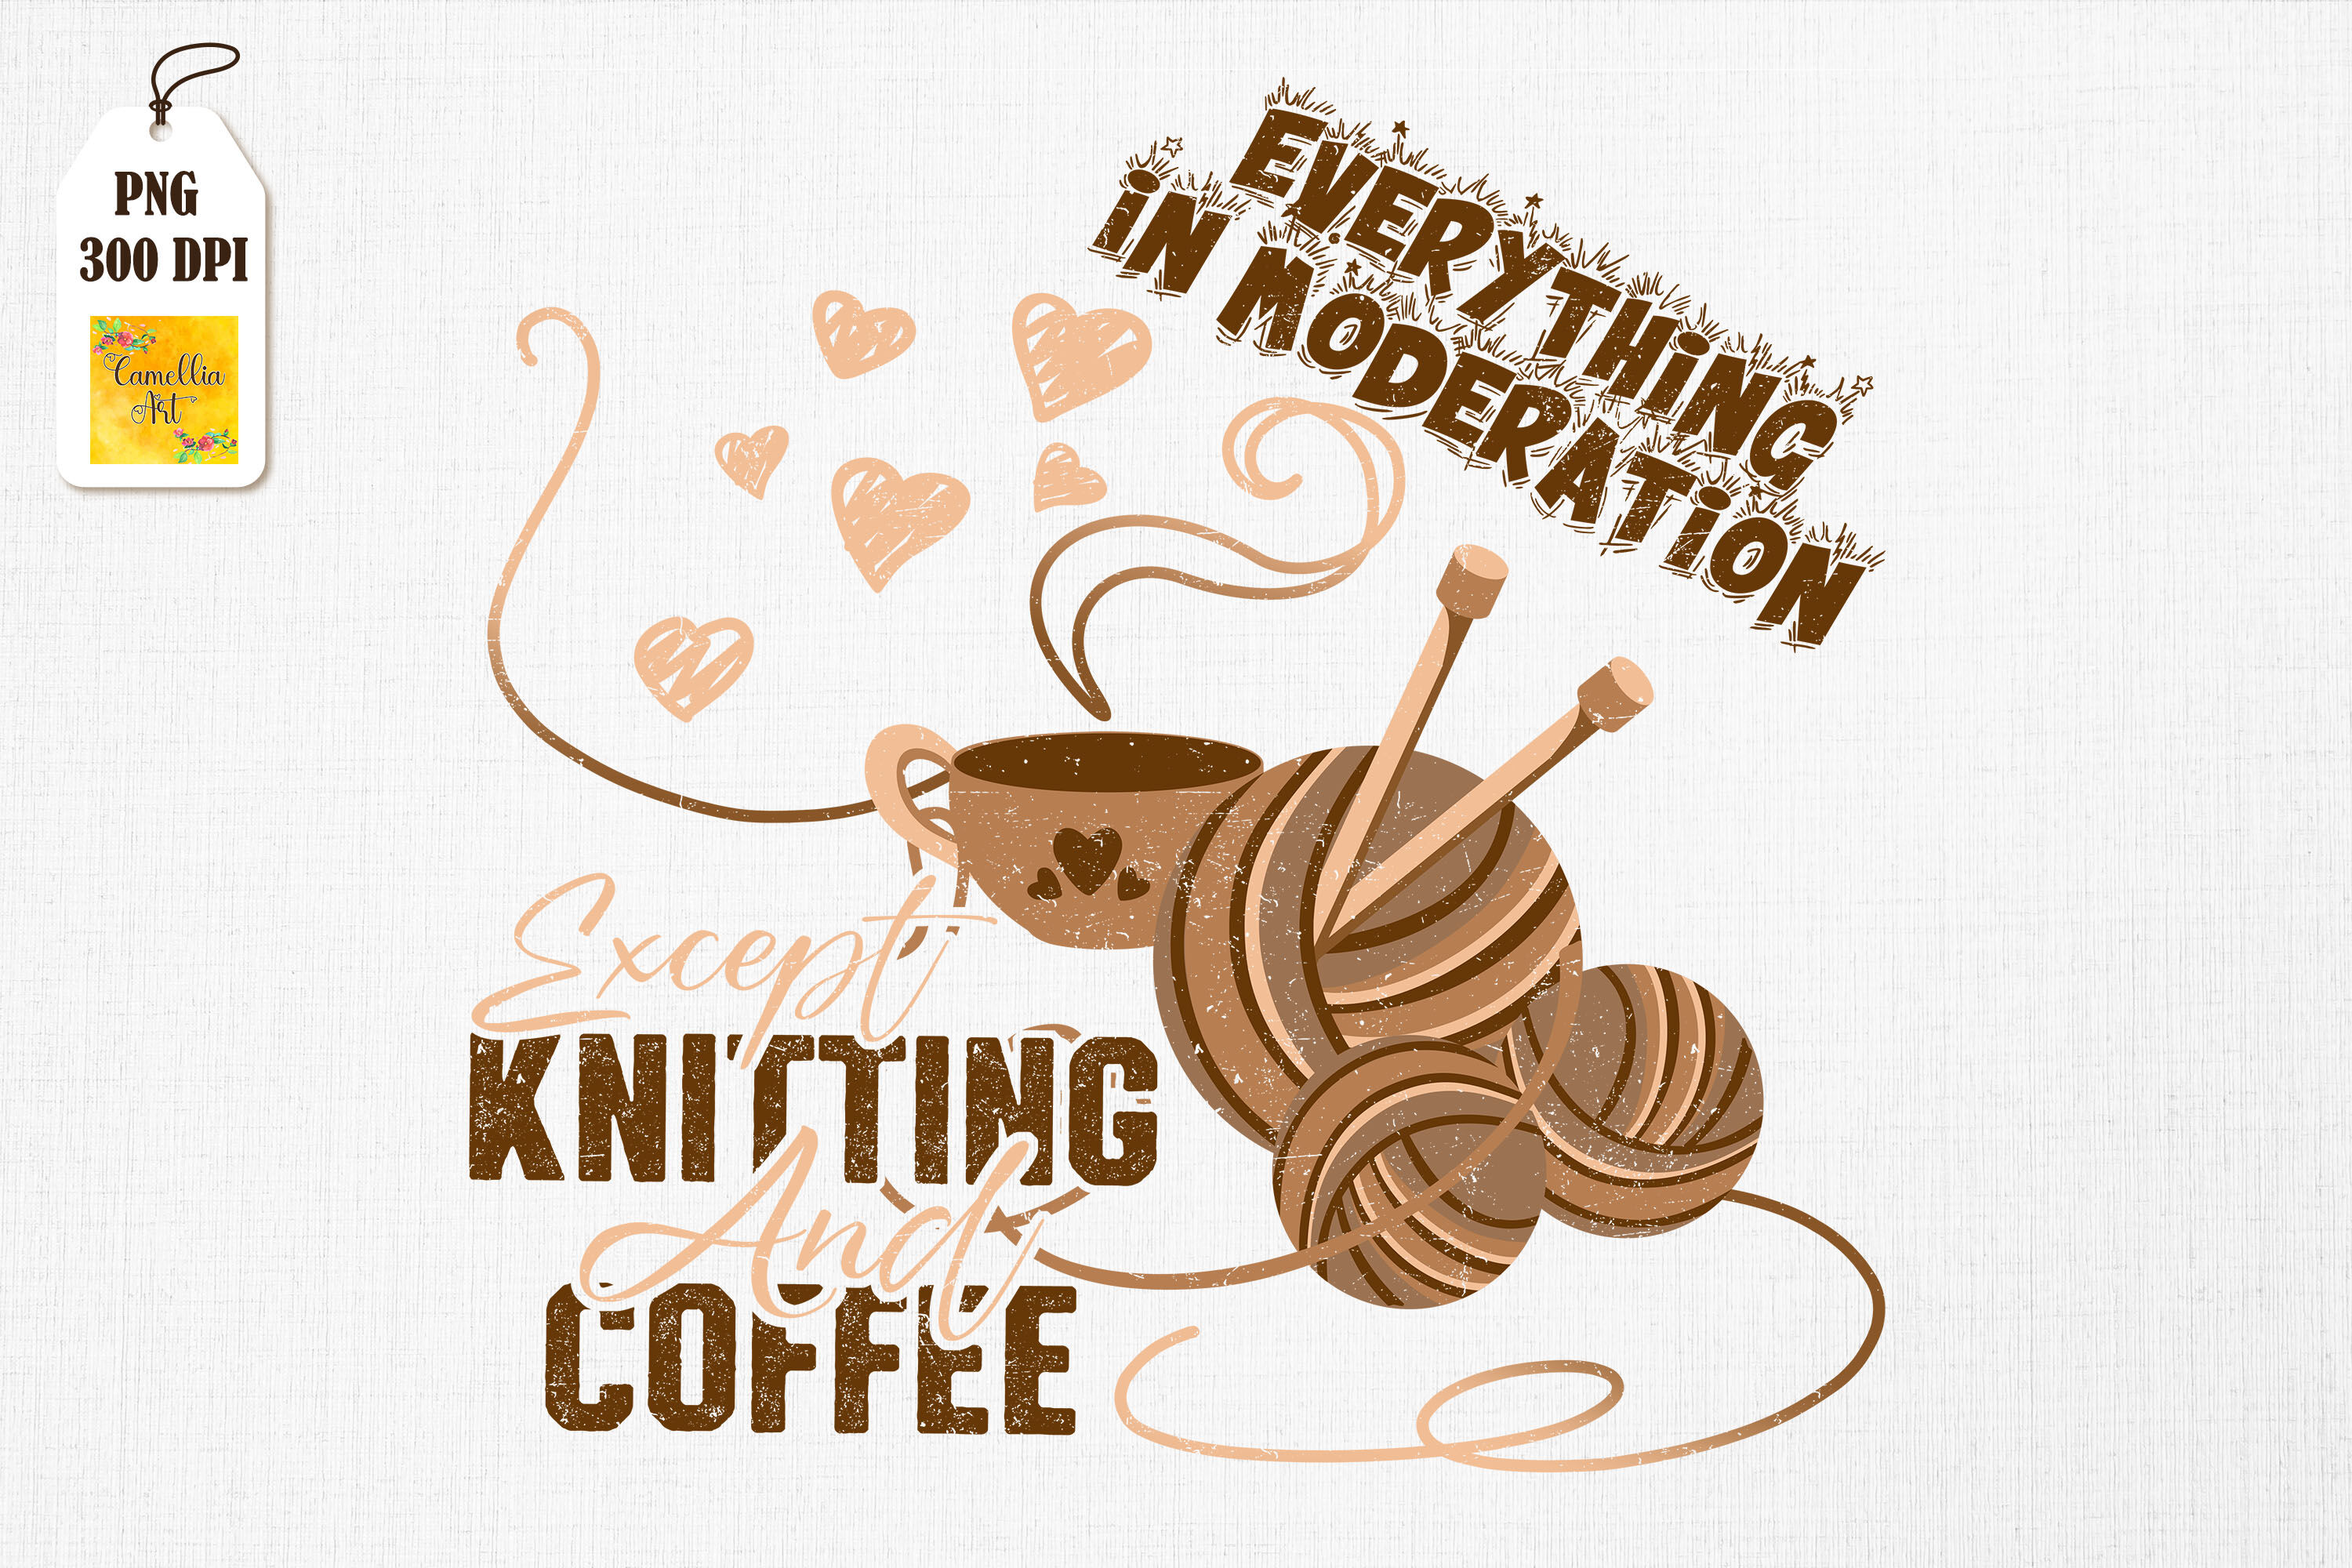 knitting funny